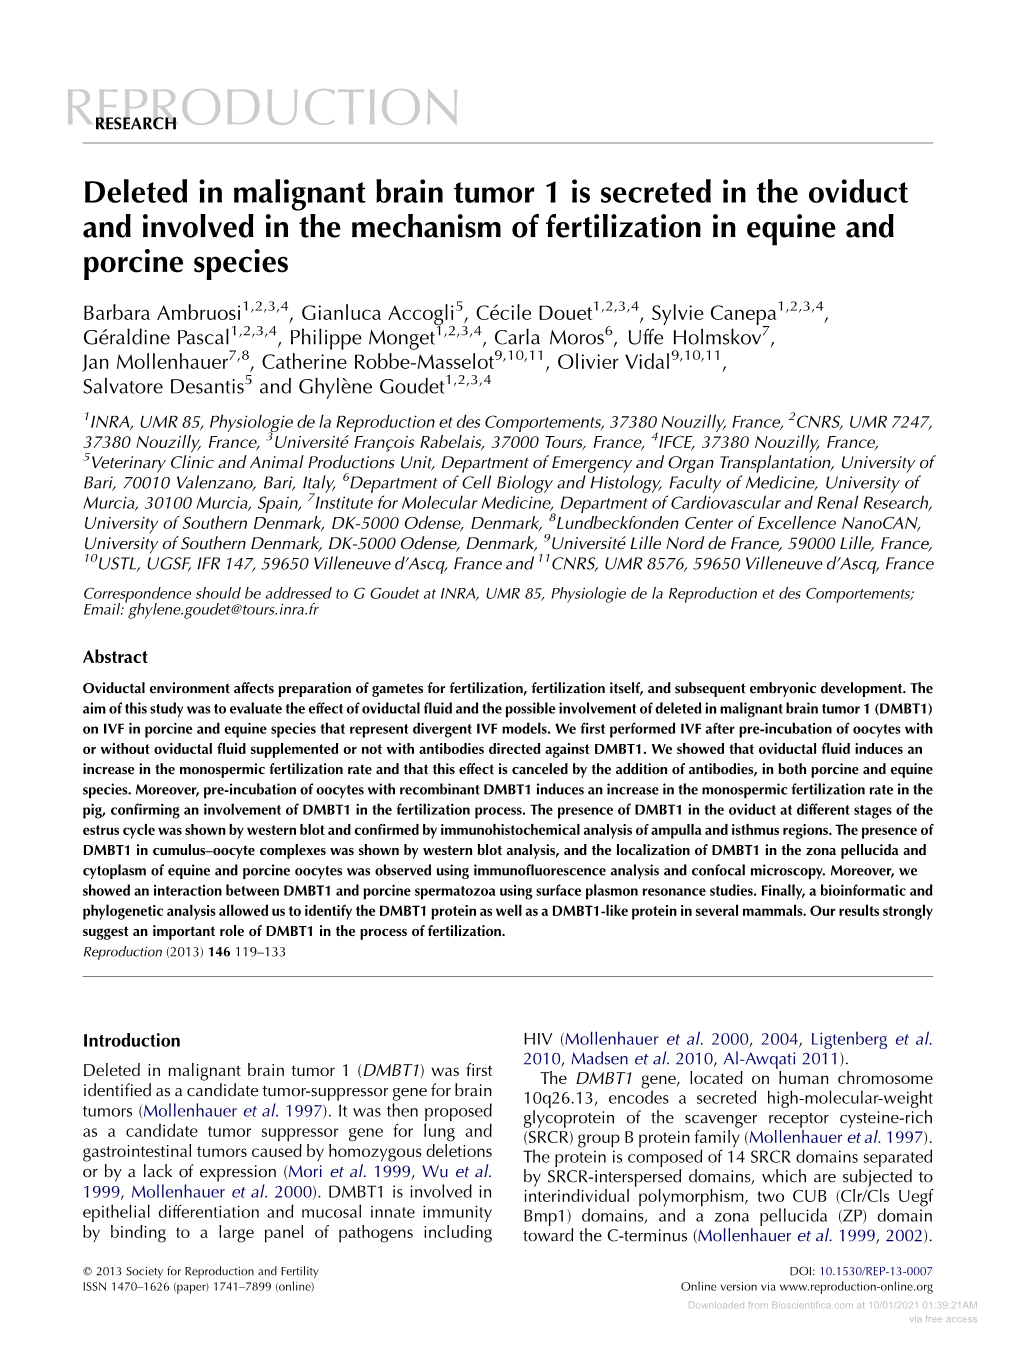 Involvement of VCAM1 in the Bovine Conceptus Adhesion to the Uterine